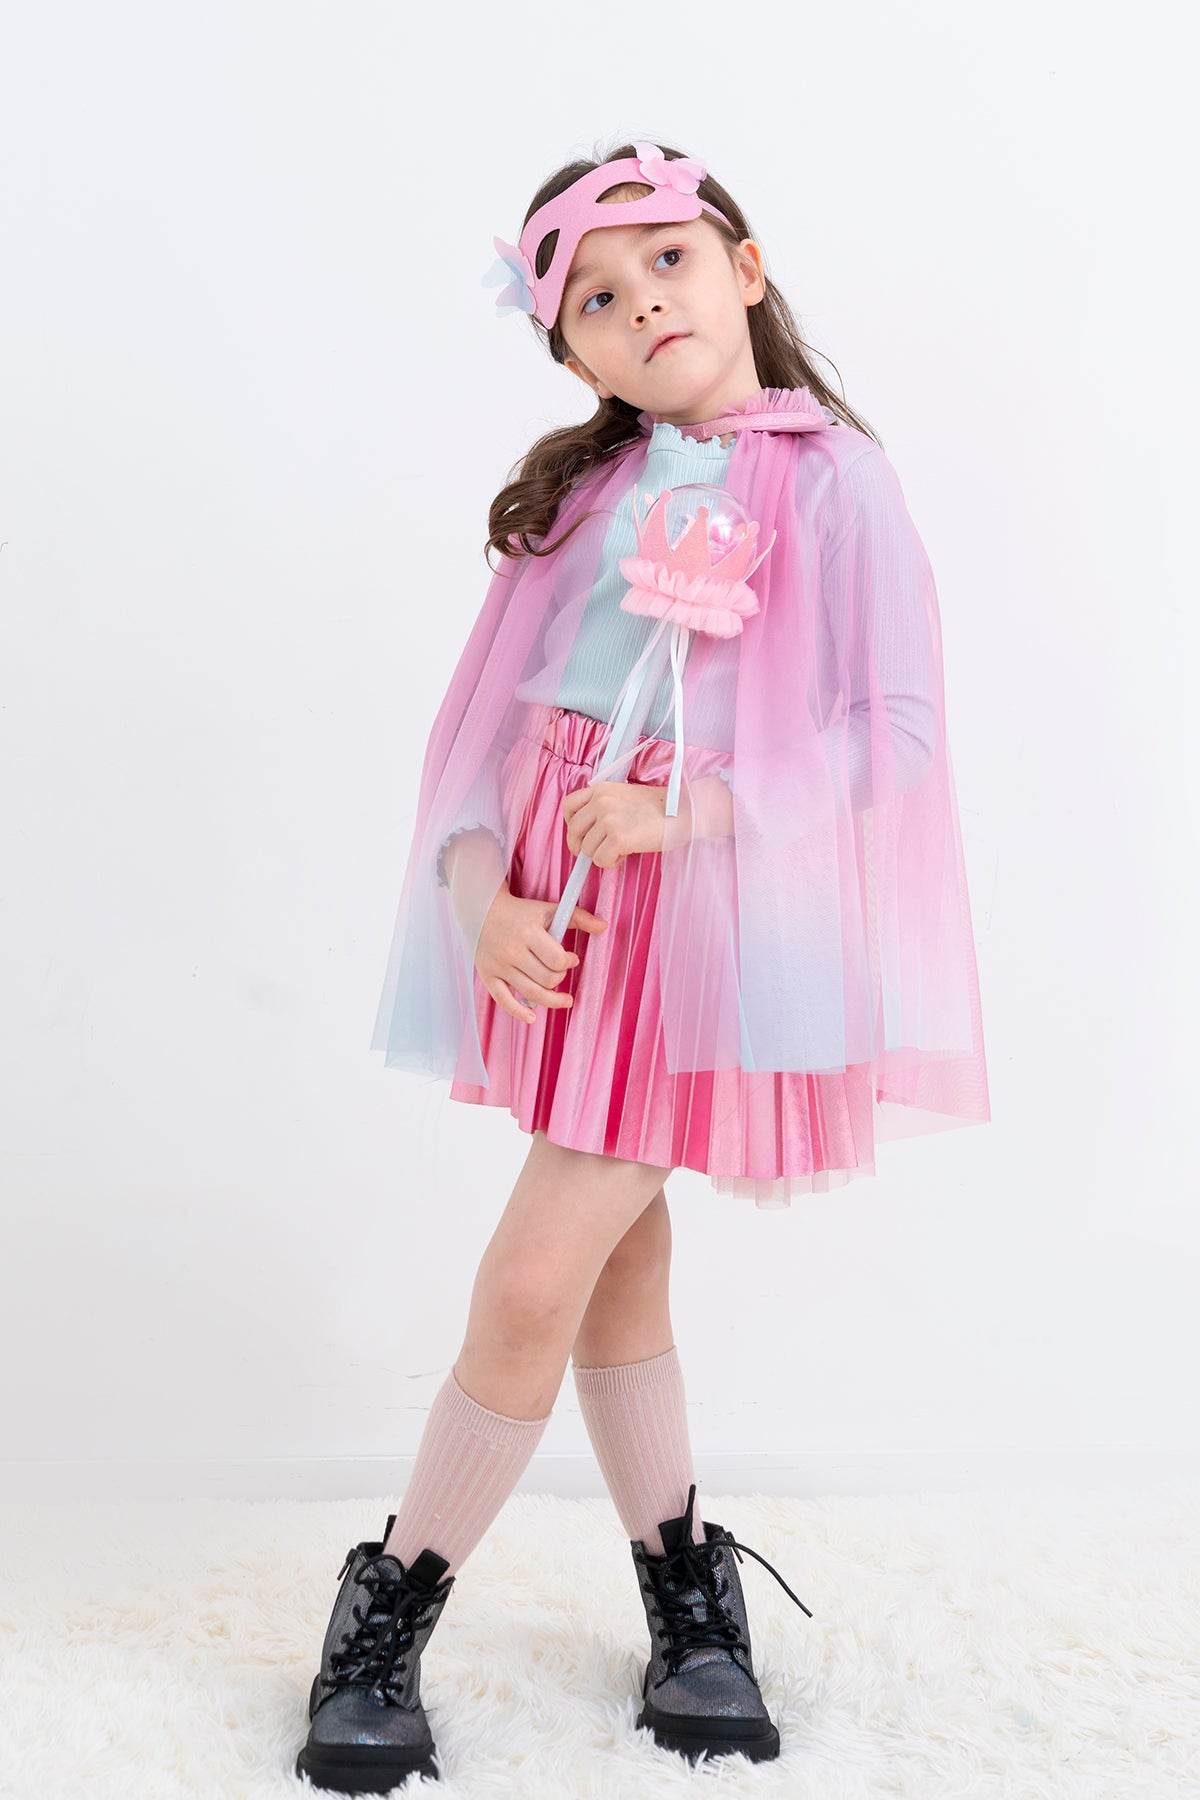 Girls Kids Children Princess Rainbow Pink Lace Veil Tulle Cape Shawl Costume